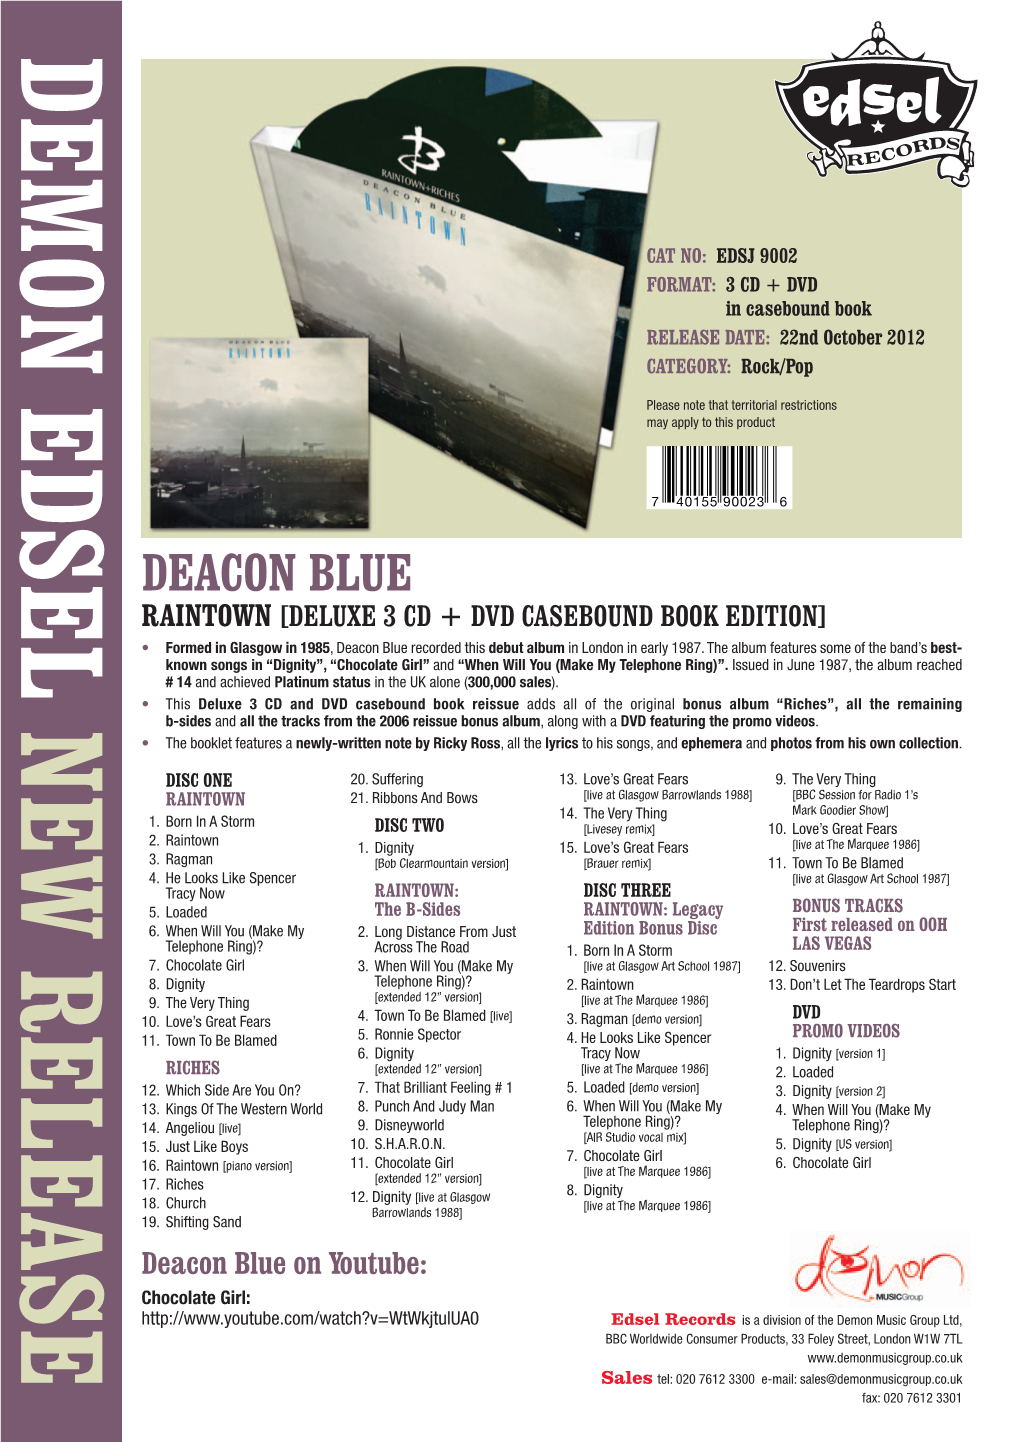 Raintown Deluxe Casebound Book Edition